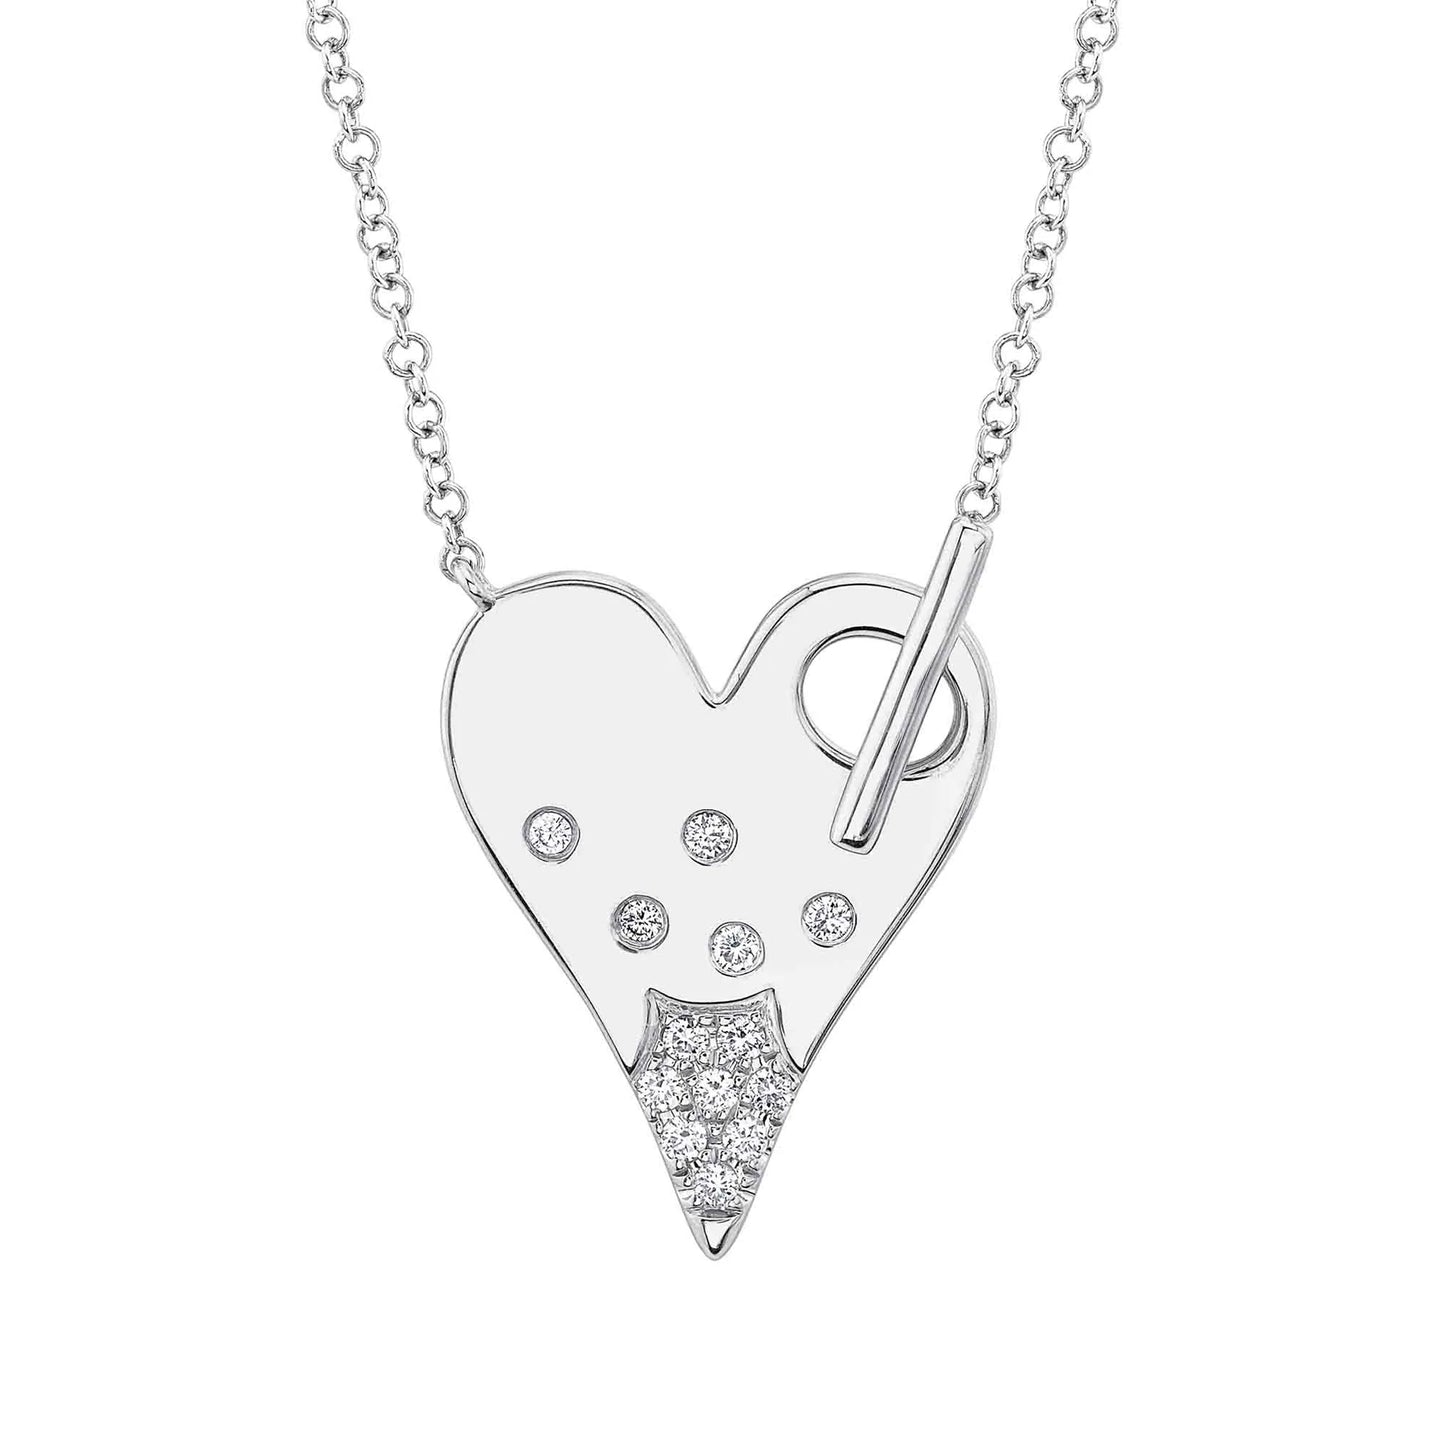 Diamond Heart Pendant Necklace 14K Yellow Gold Bezel Set Floating Round 0.13 CT